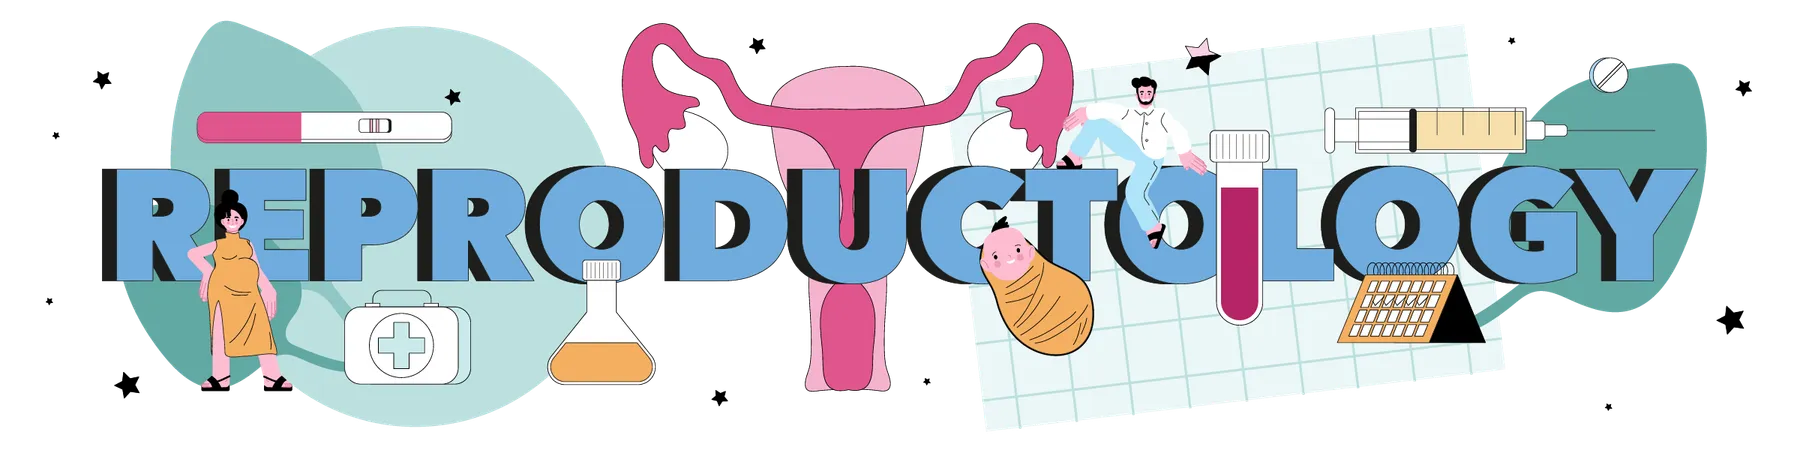 Pregnancy monitoring and medical diagnosis  Illustration